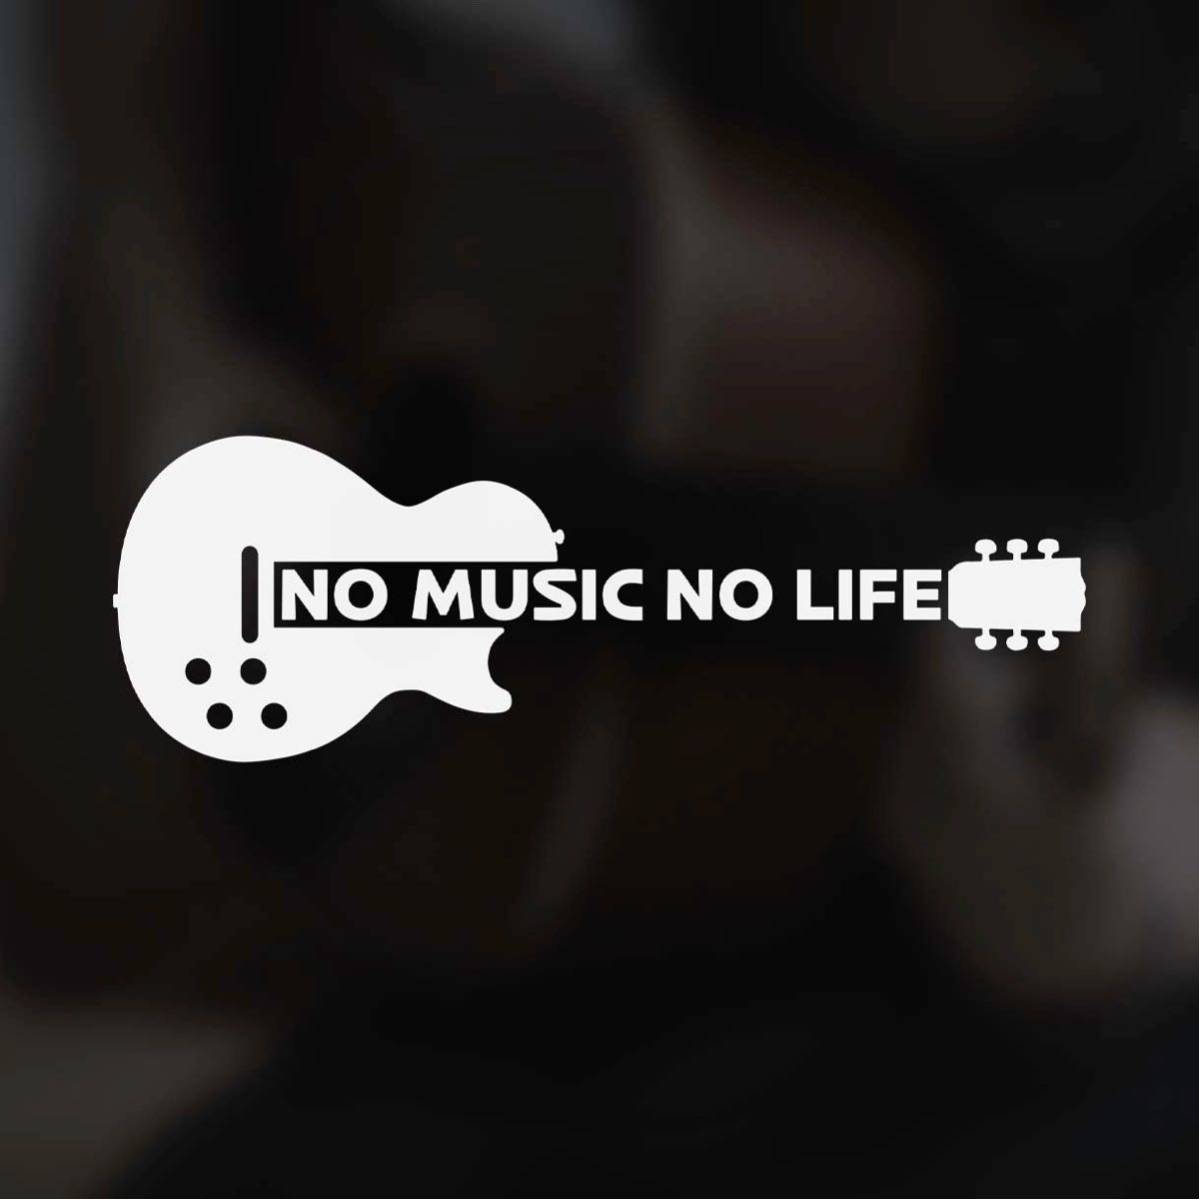 [Наклейка с резанием] Les Paul Silhouette No Music No Life ЭЛЕКАРИКАТИКА ГИБСОН ЛЕС ПОЛ РОКА МУЗЫКА